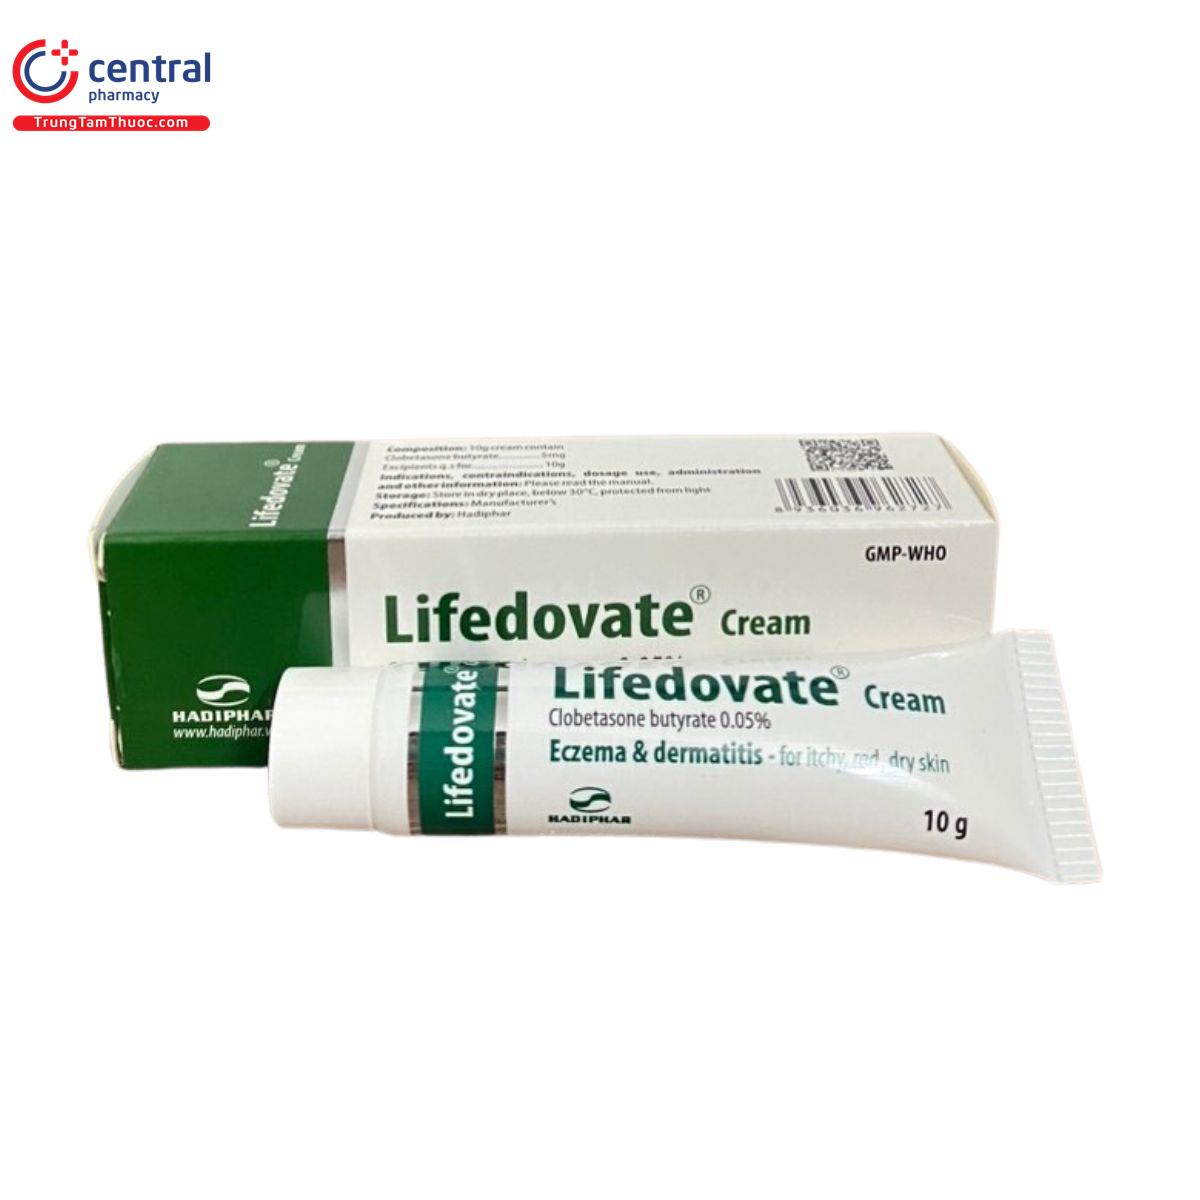 lifedovate cream 1 N5327